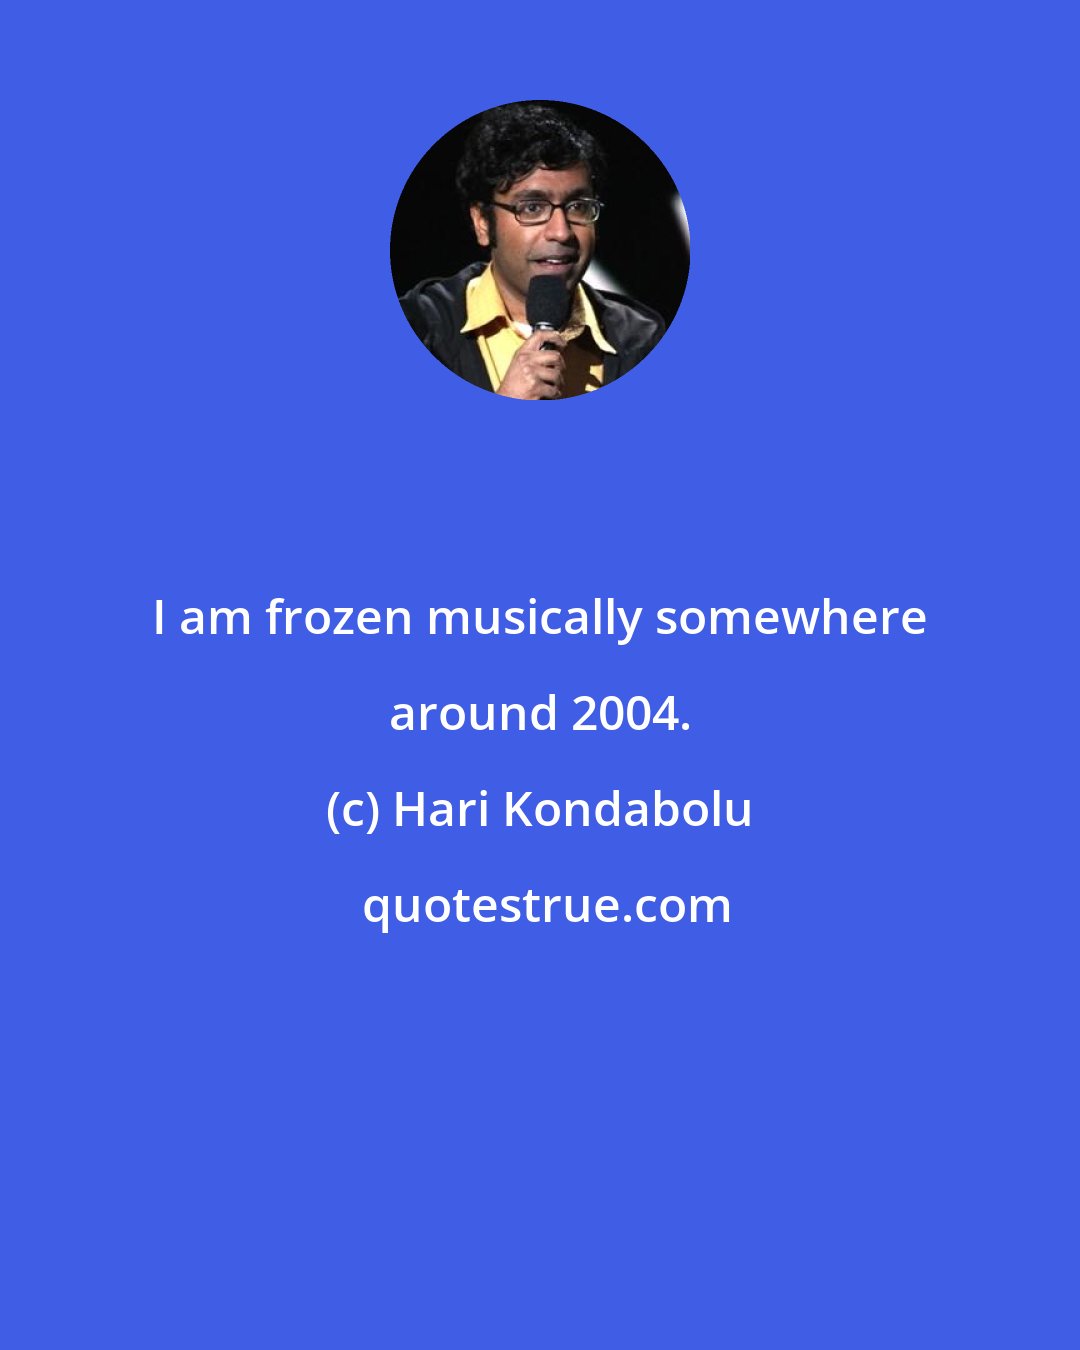 Hari Kondabolu: I am frozen musically somewhere around 2004.